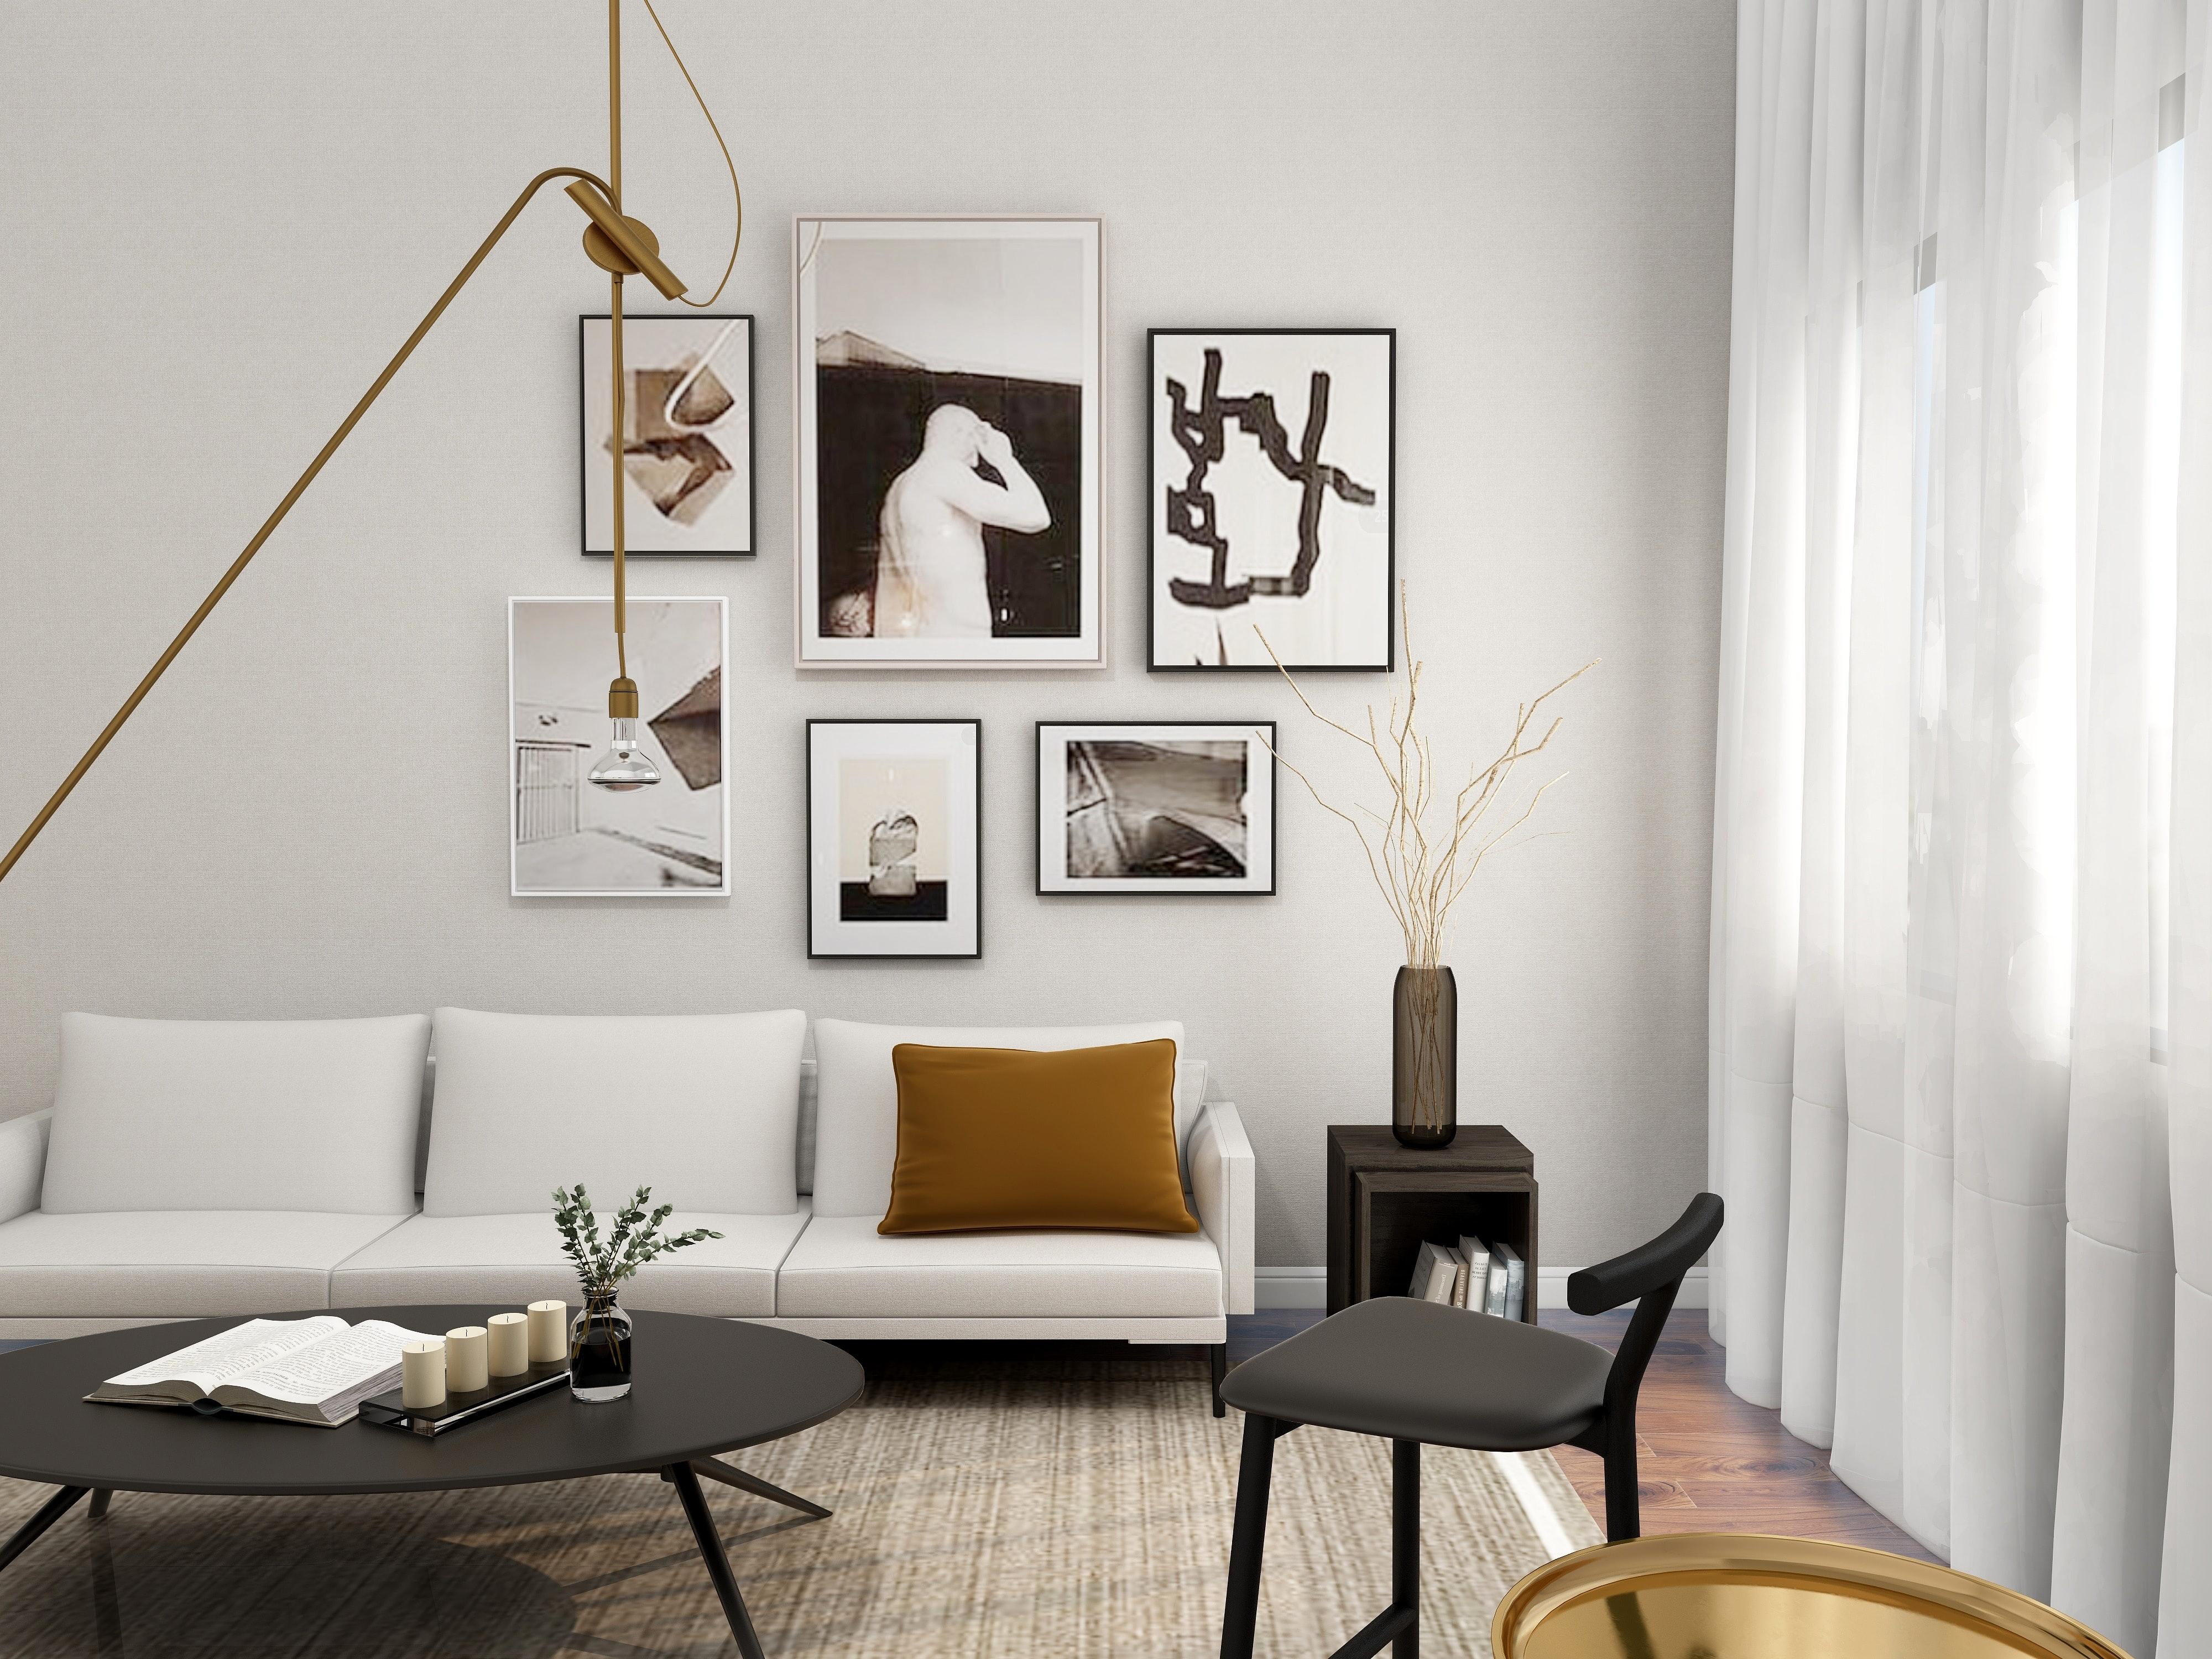 8 Inspiring Living Room Design Ideas